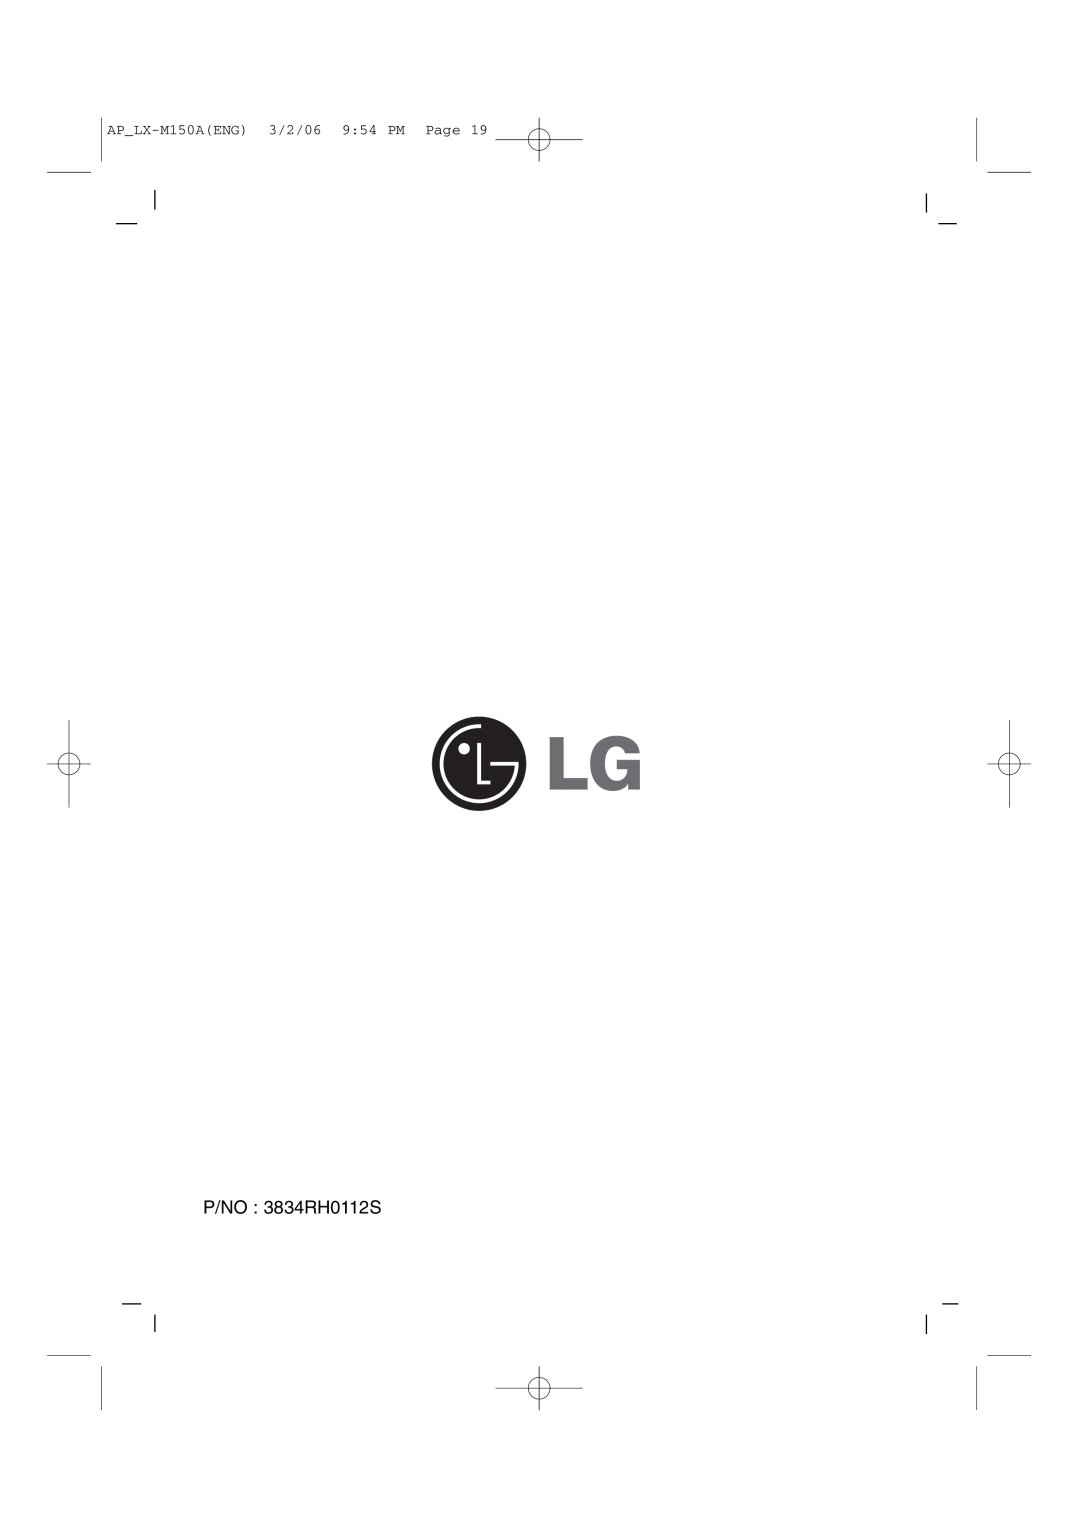 LG Electronics owner manual P/NO 3834RH0112S, AP LX-M150AENG3/2/06 9 54 PM Page 